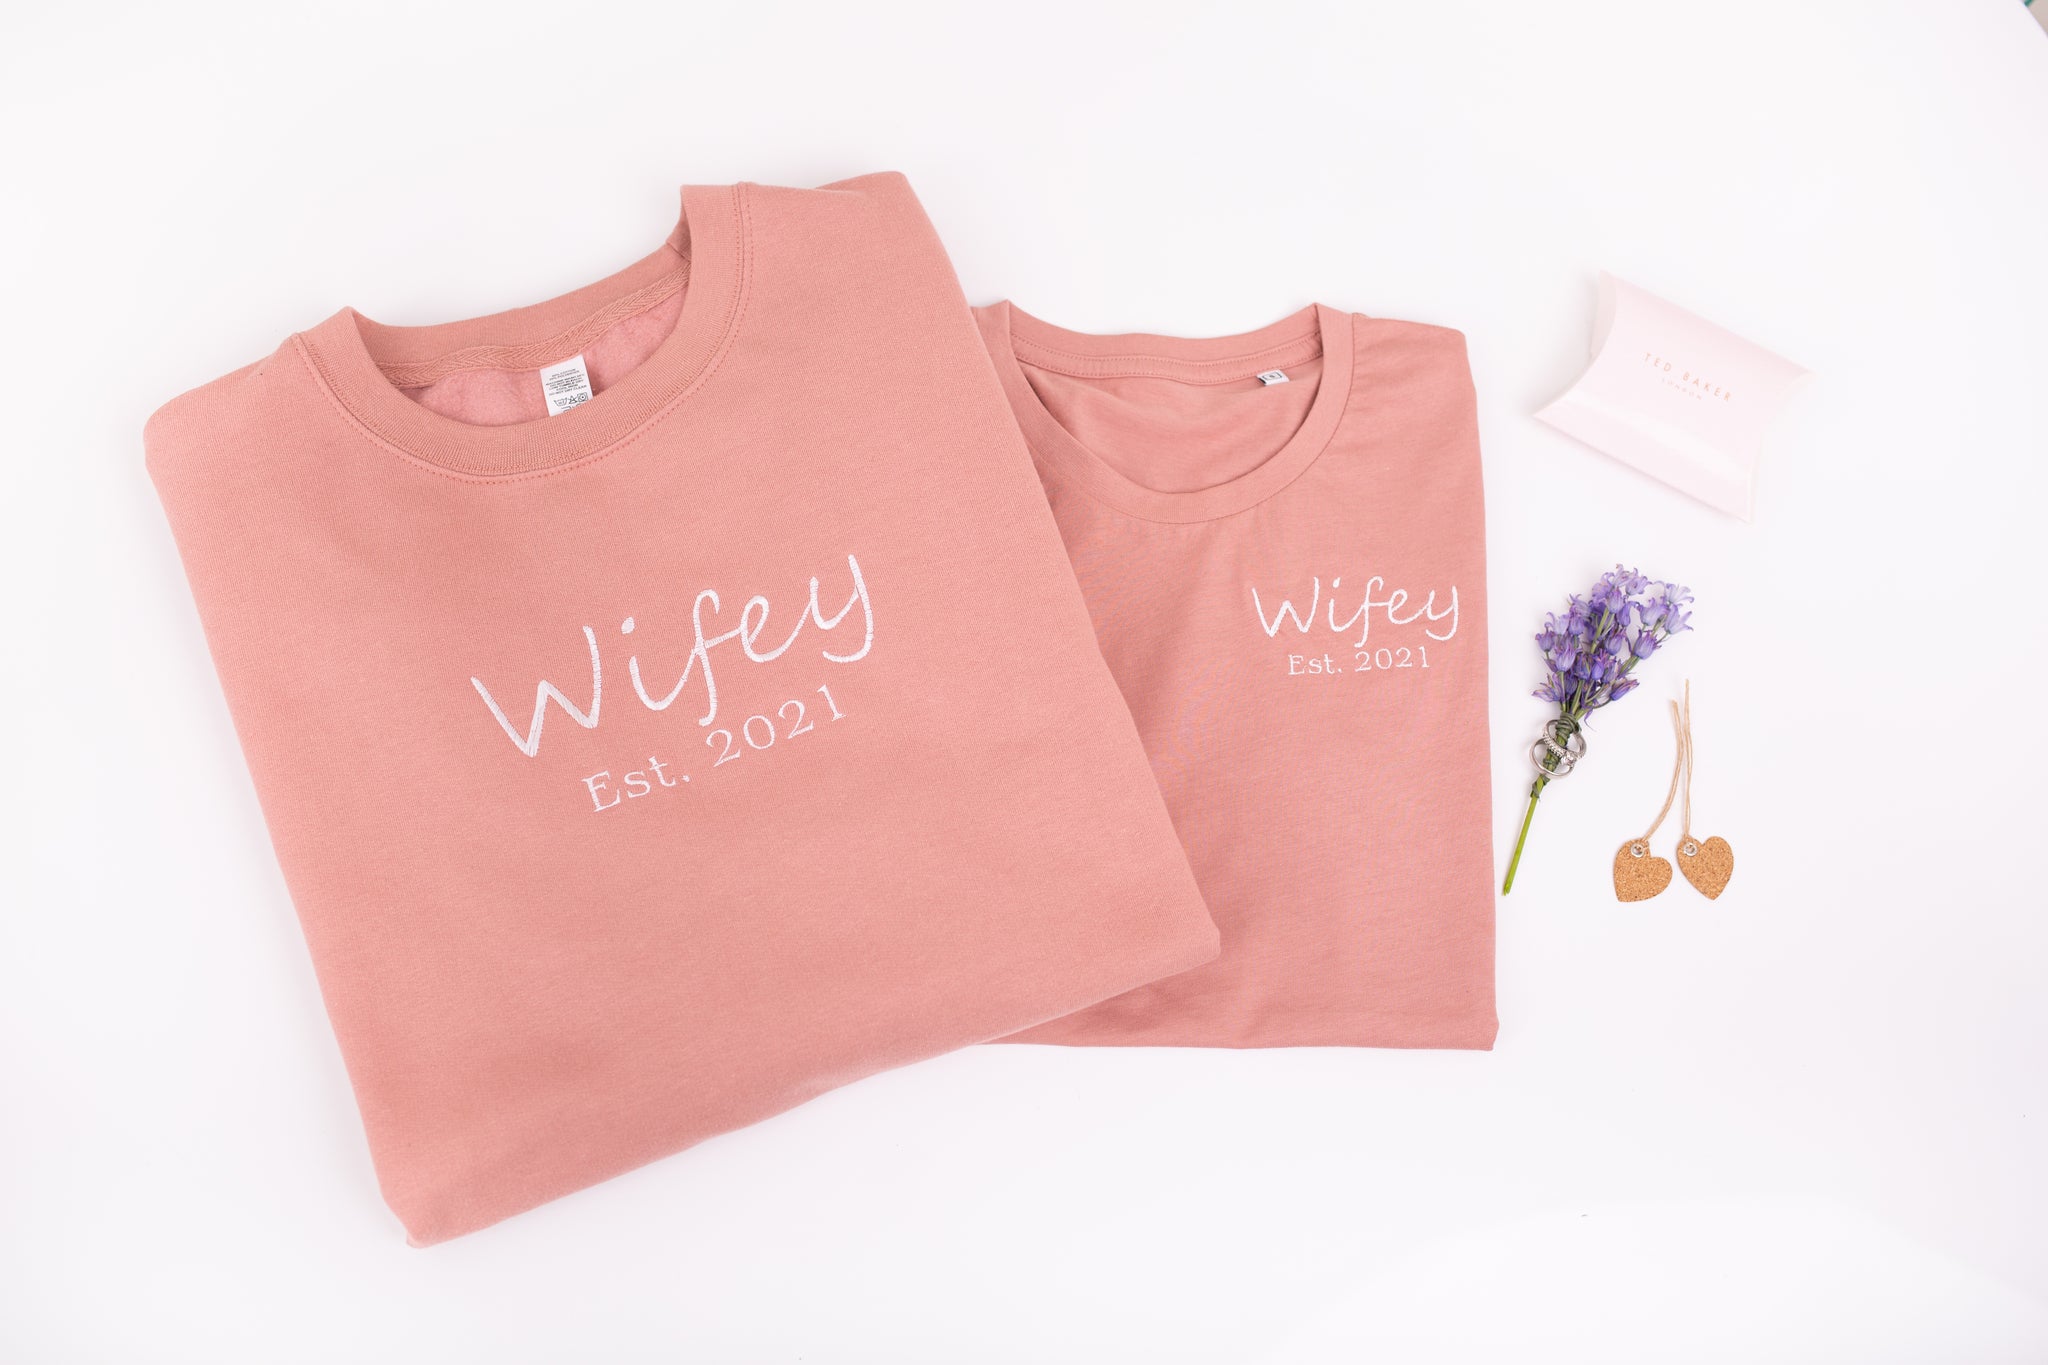 Wifey Est Sweatshirt And T-Shirt | Ted & Stitch 